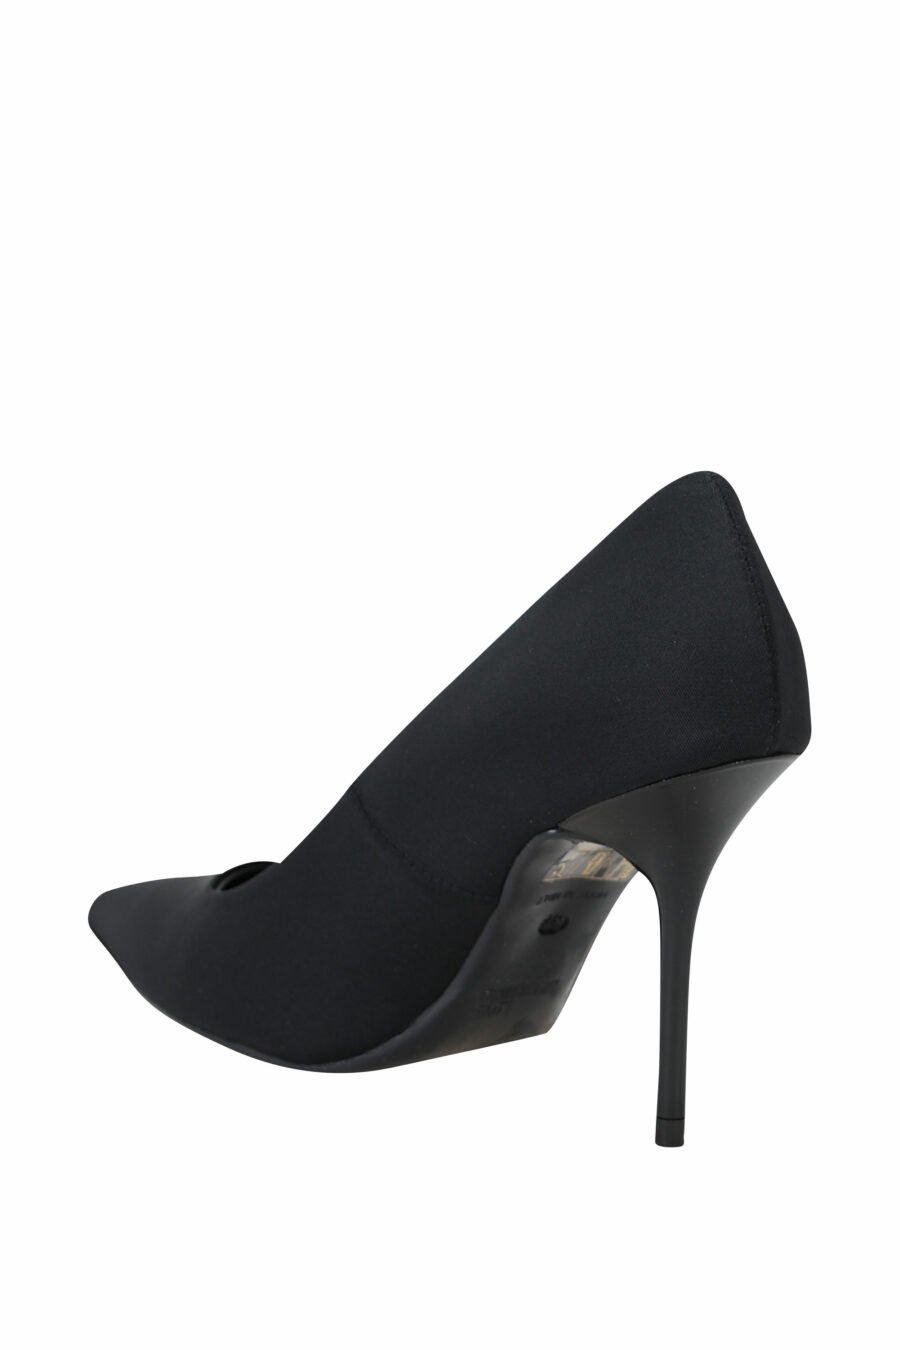 Black heels with mini-logo - 8054653052130 3